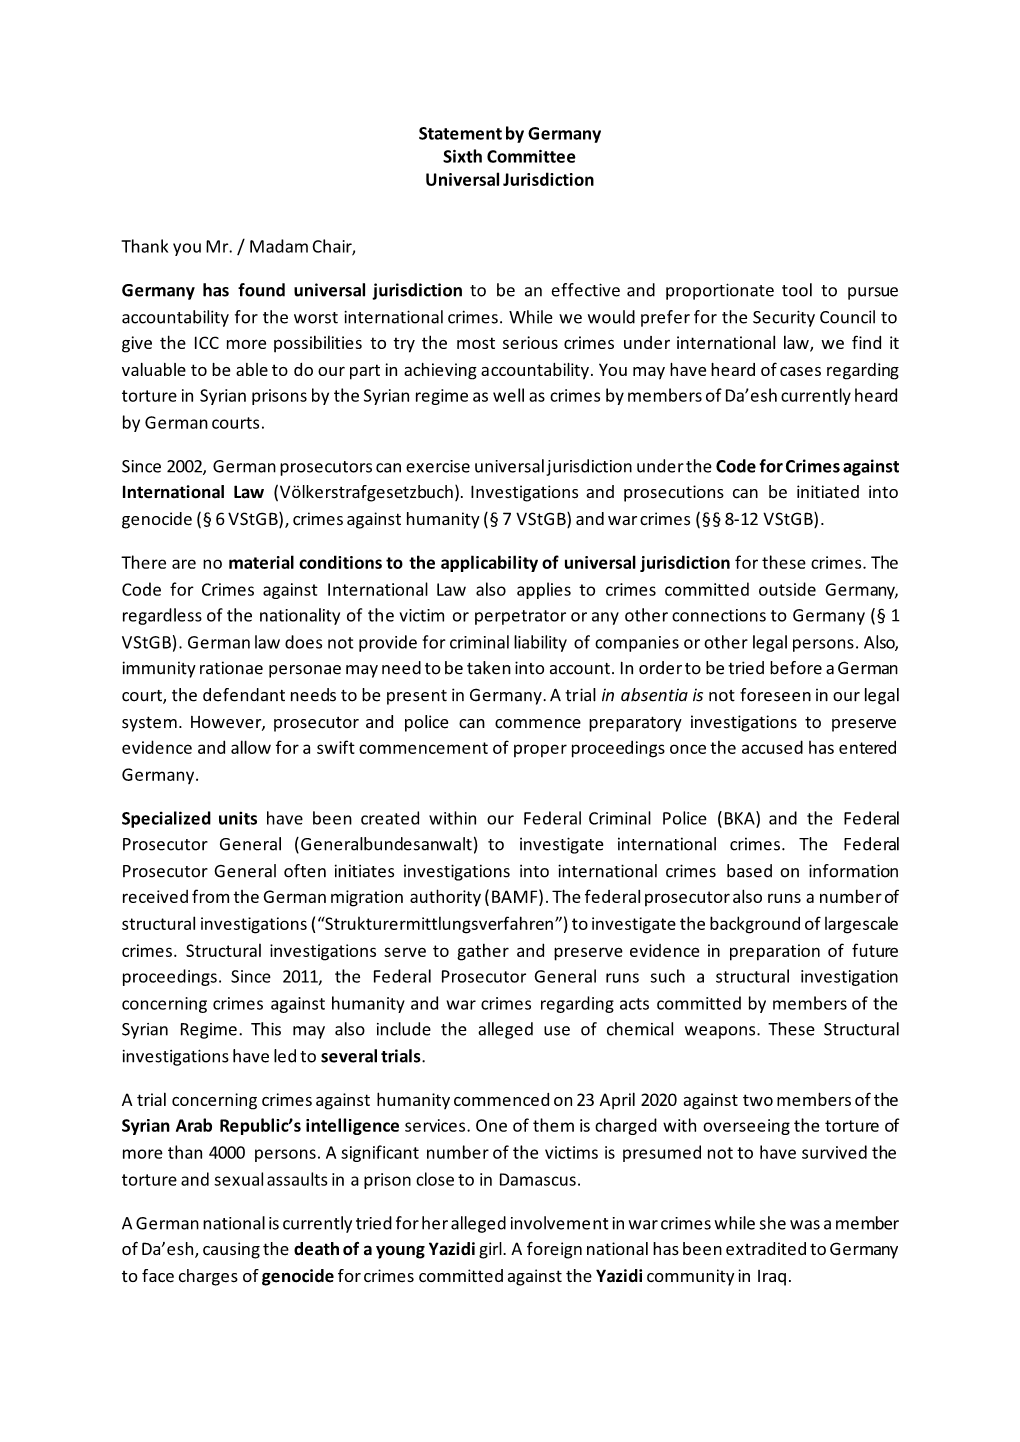 Germany Statement -- Universal Jurisdiction -- Sixth Committee